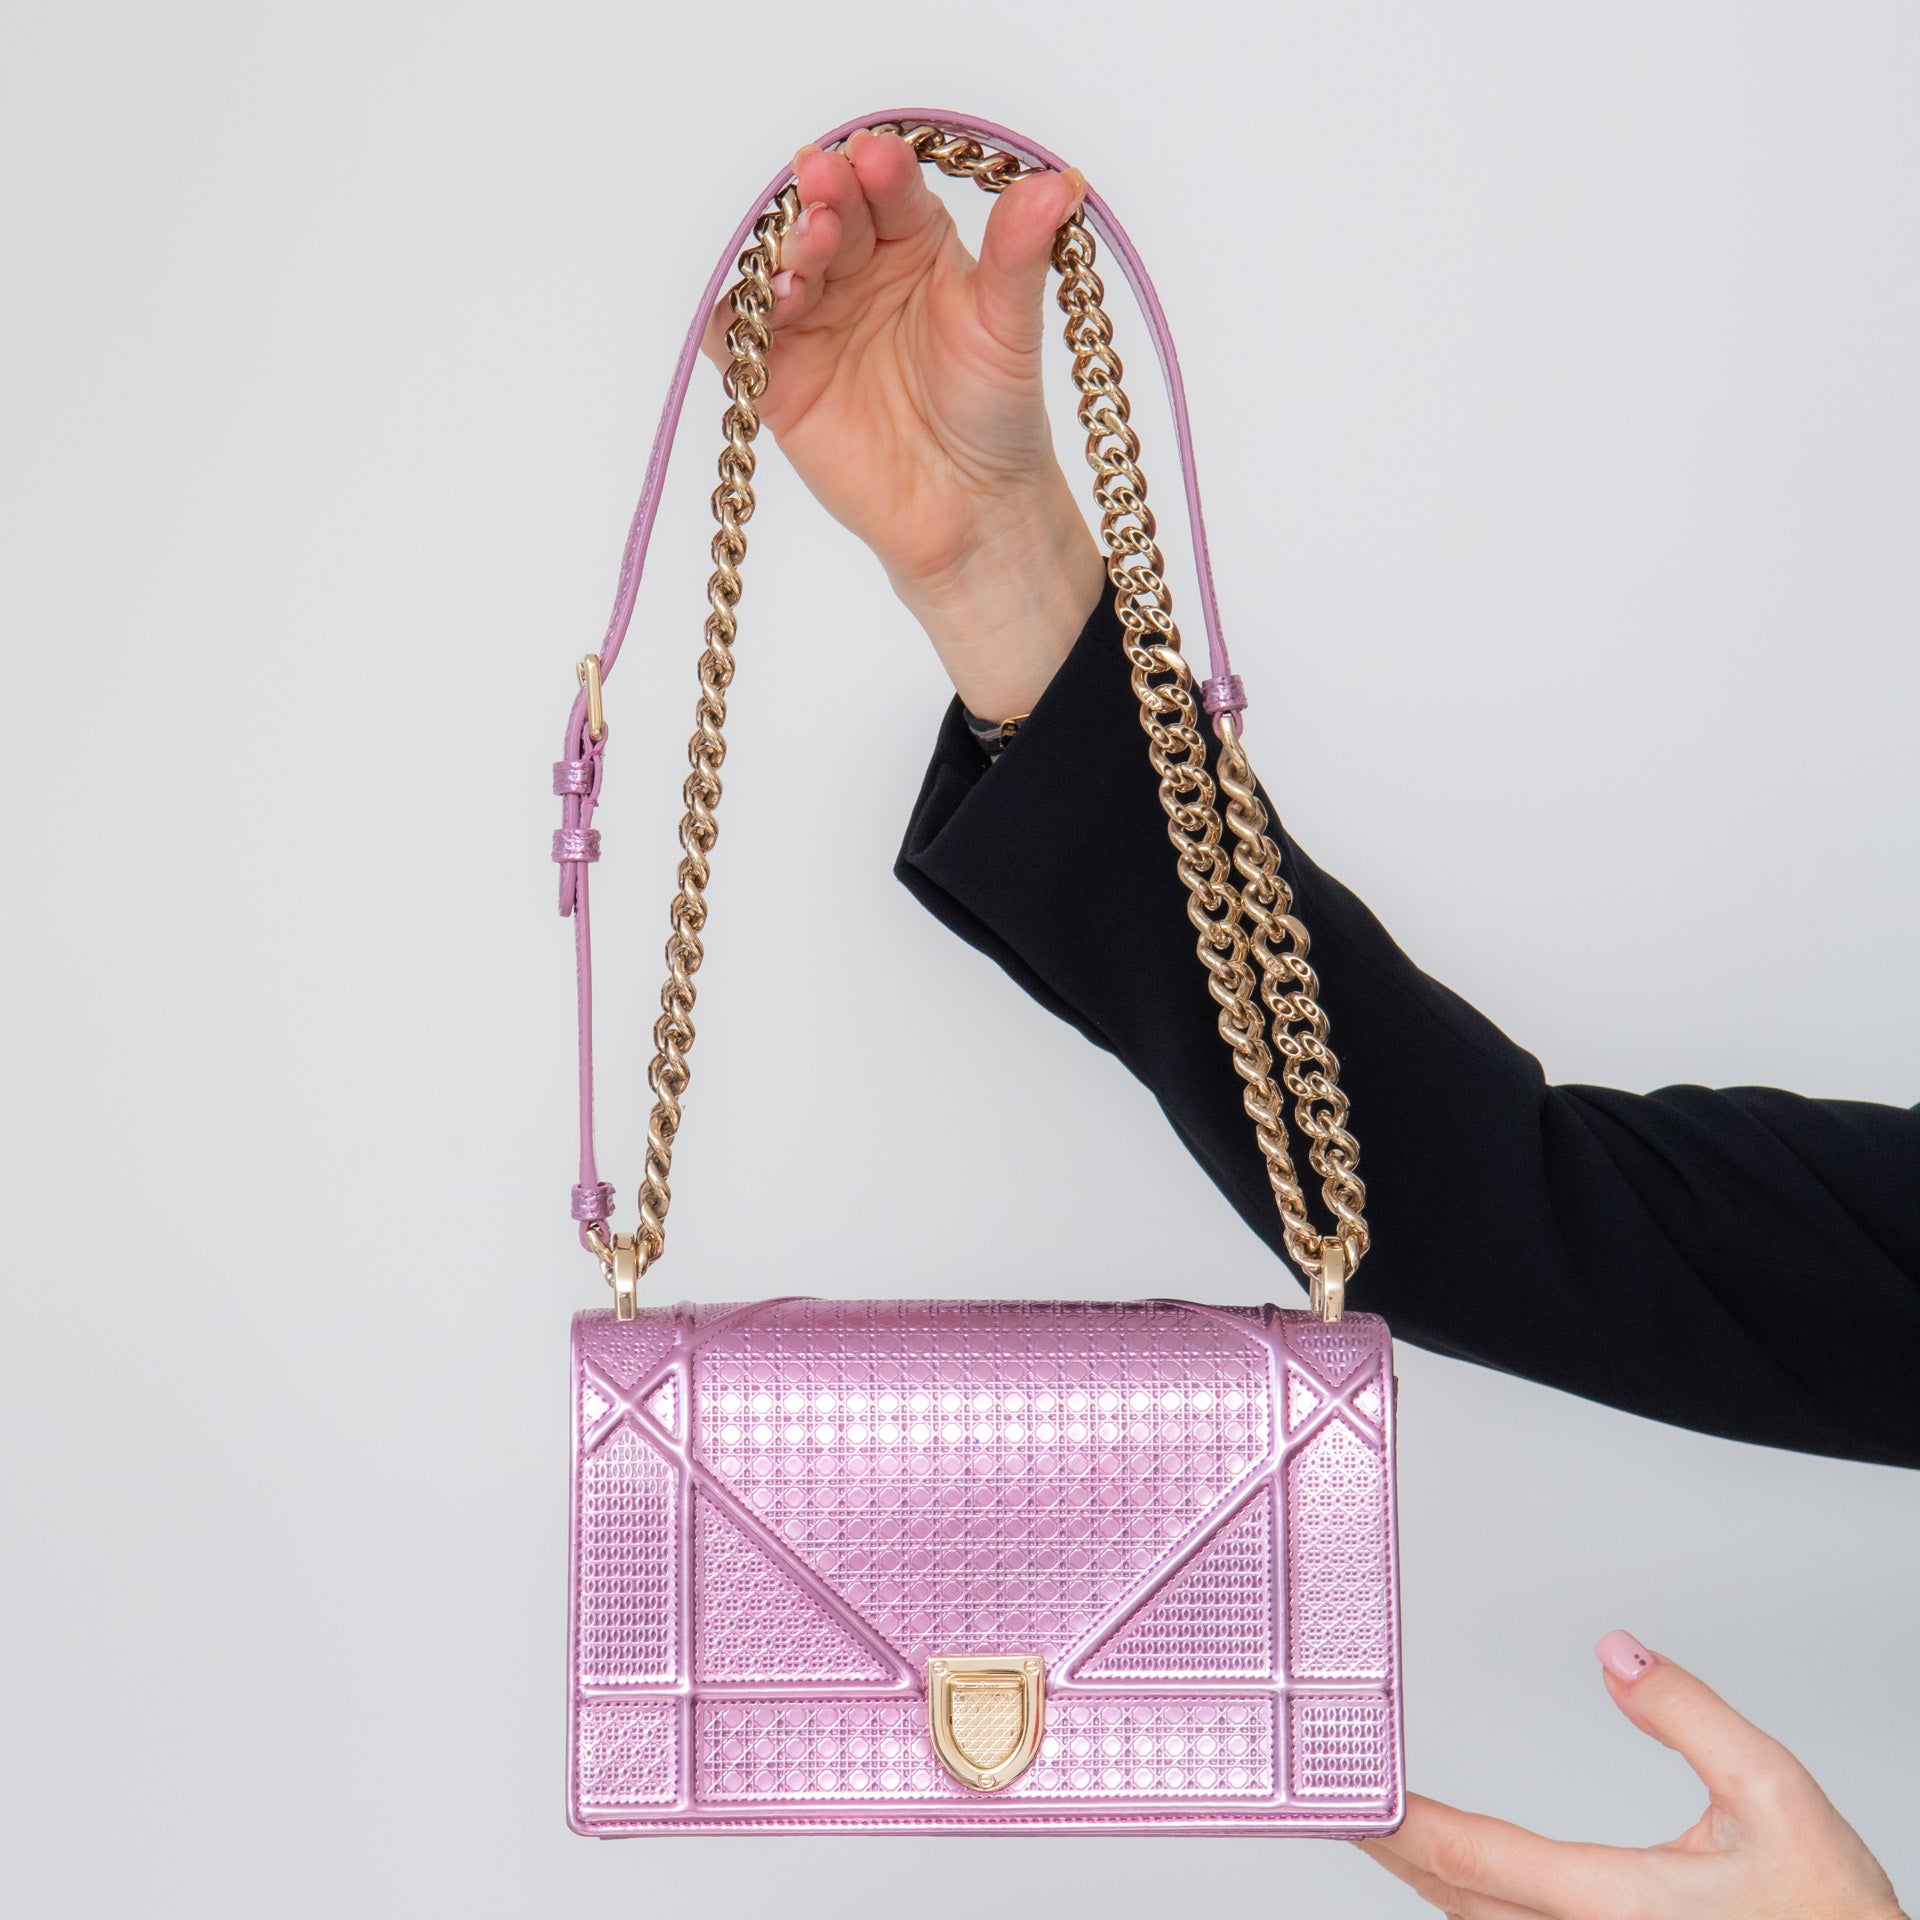 Dior Diorama Metallic Pink Bag - Image 5 of 8